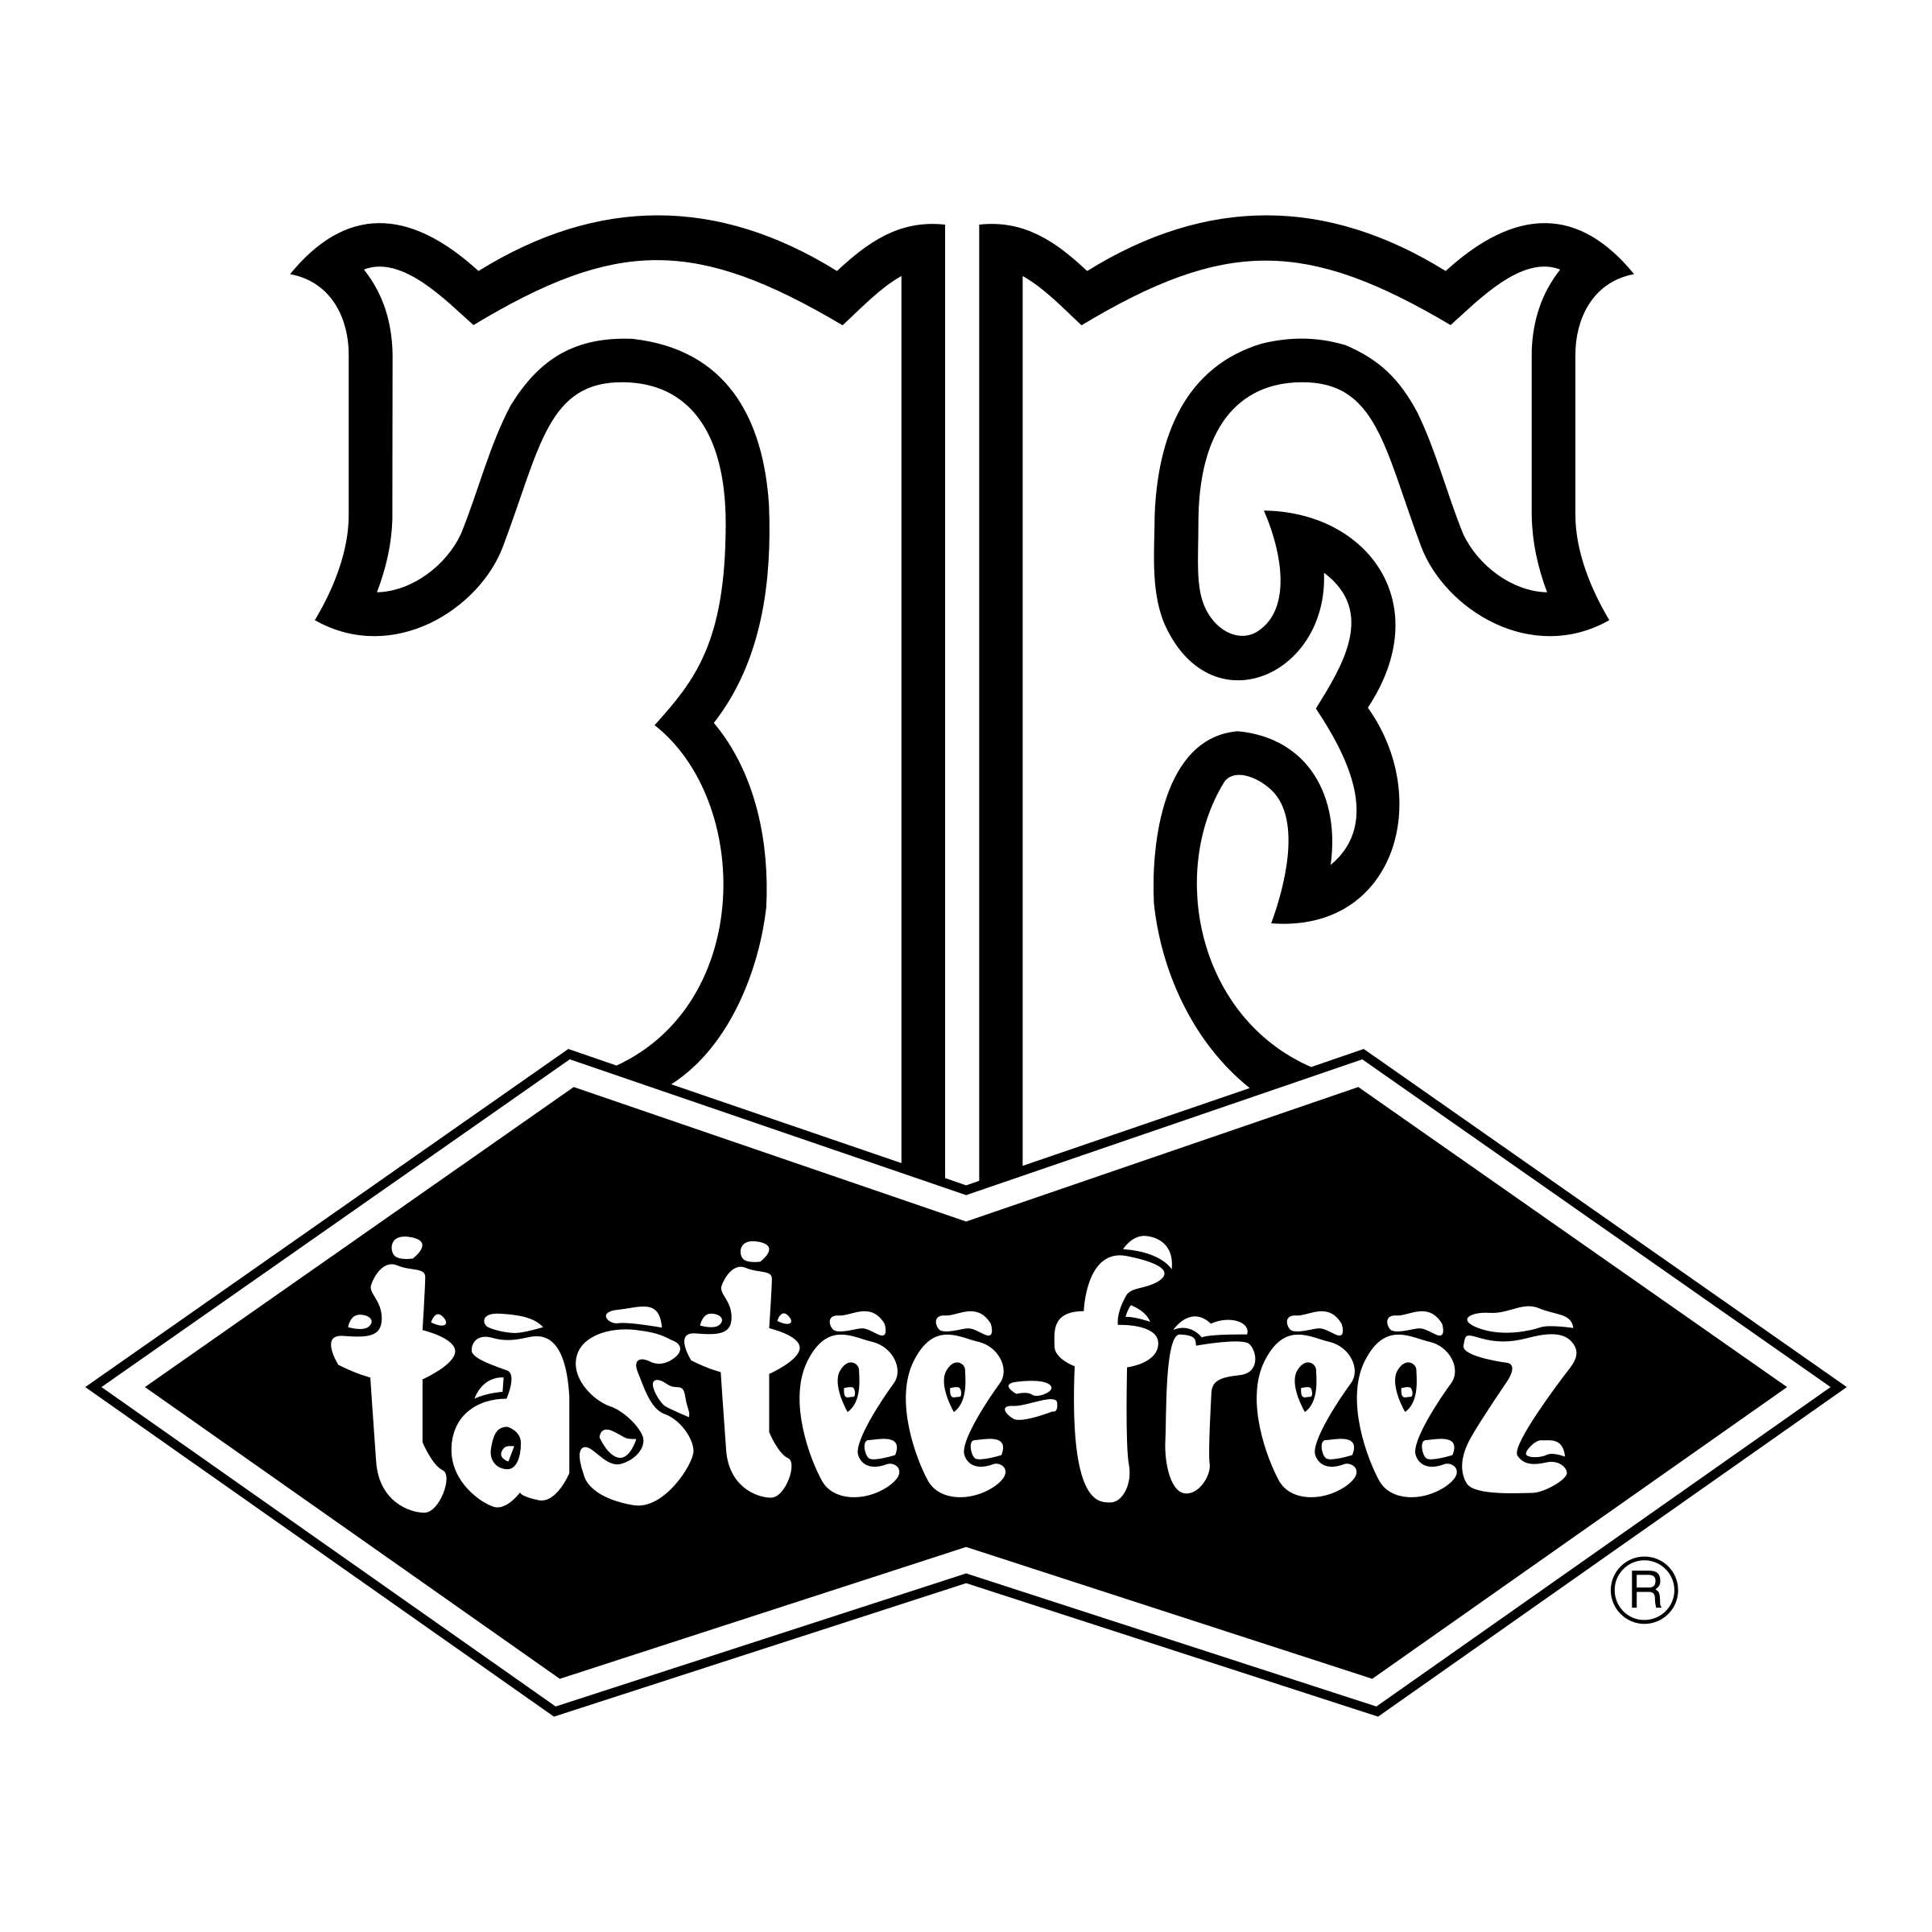 Tastee Logo - Tastee Freez Logo PNG Transparent & SVG Vector - Freebie Supply